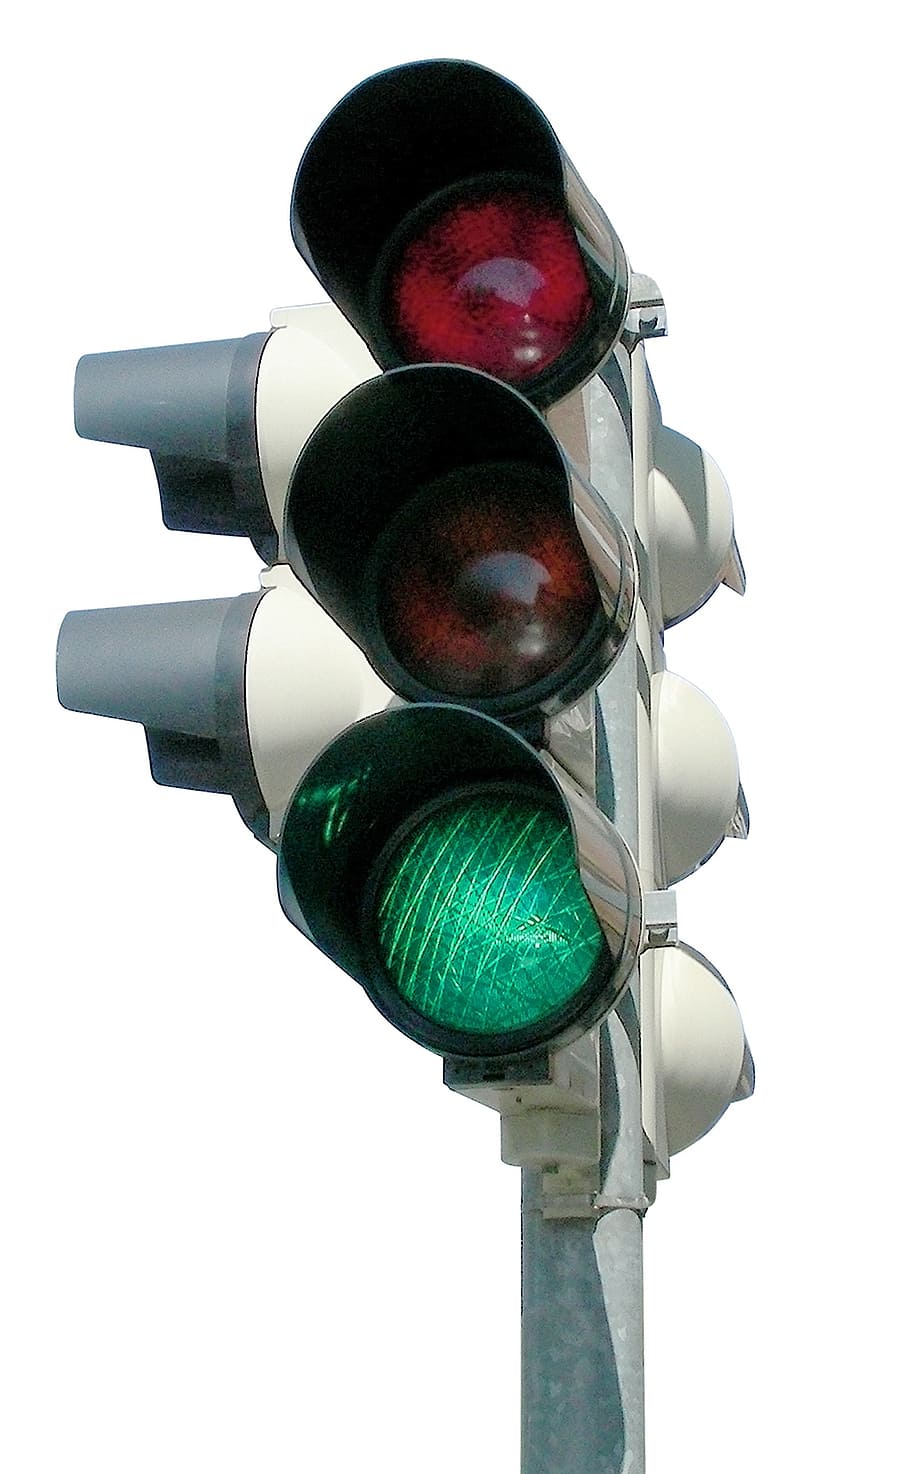 lampu lalu lintas, hijau, sinyal lampu lalu lintas, lampu, lalu lintas, pergi, jalan, lampu hijau, suar, aturan jalan